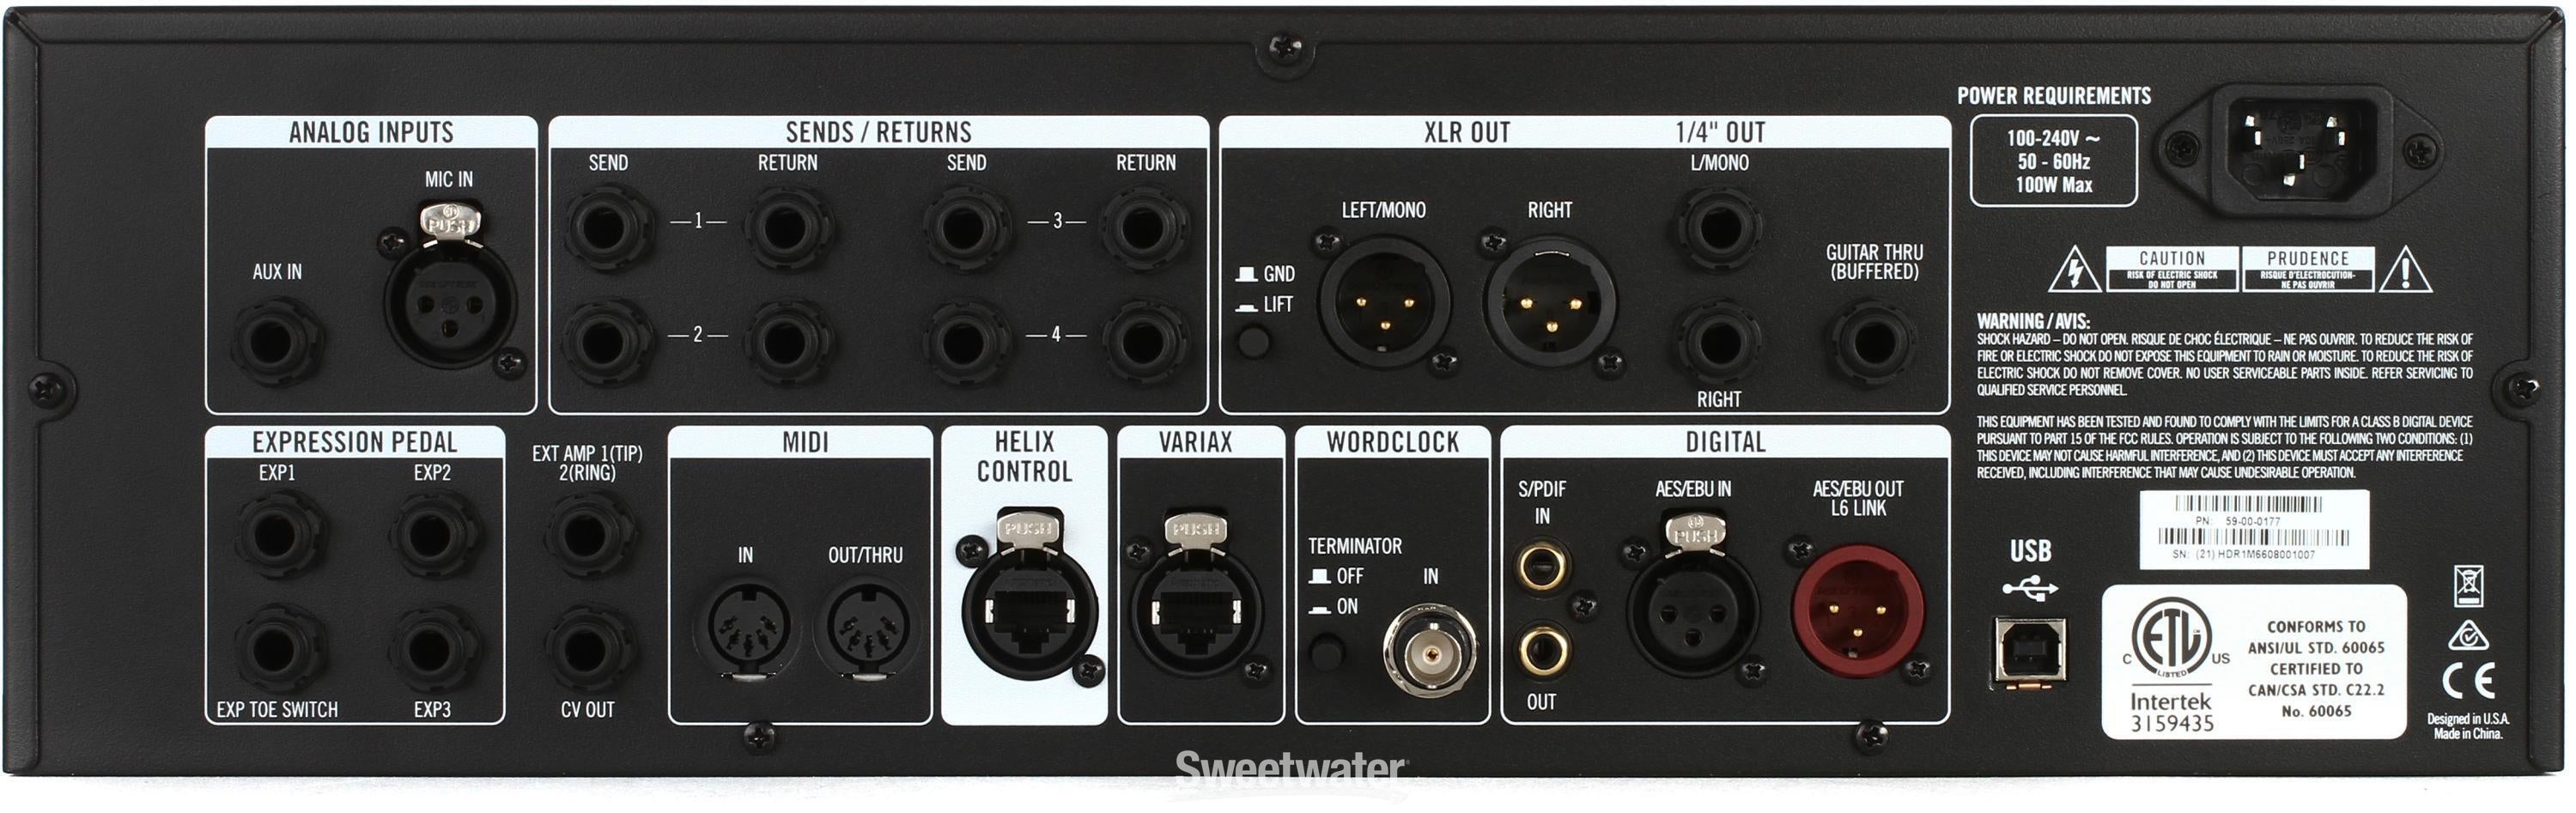 Line 6 Helix Rack Guitar Multi-effects Rack Processor | Sweetwater